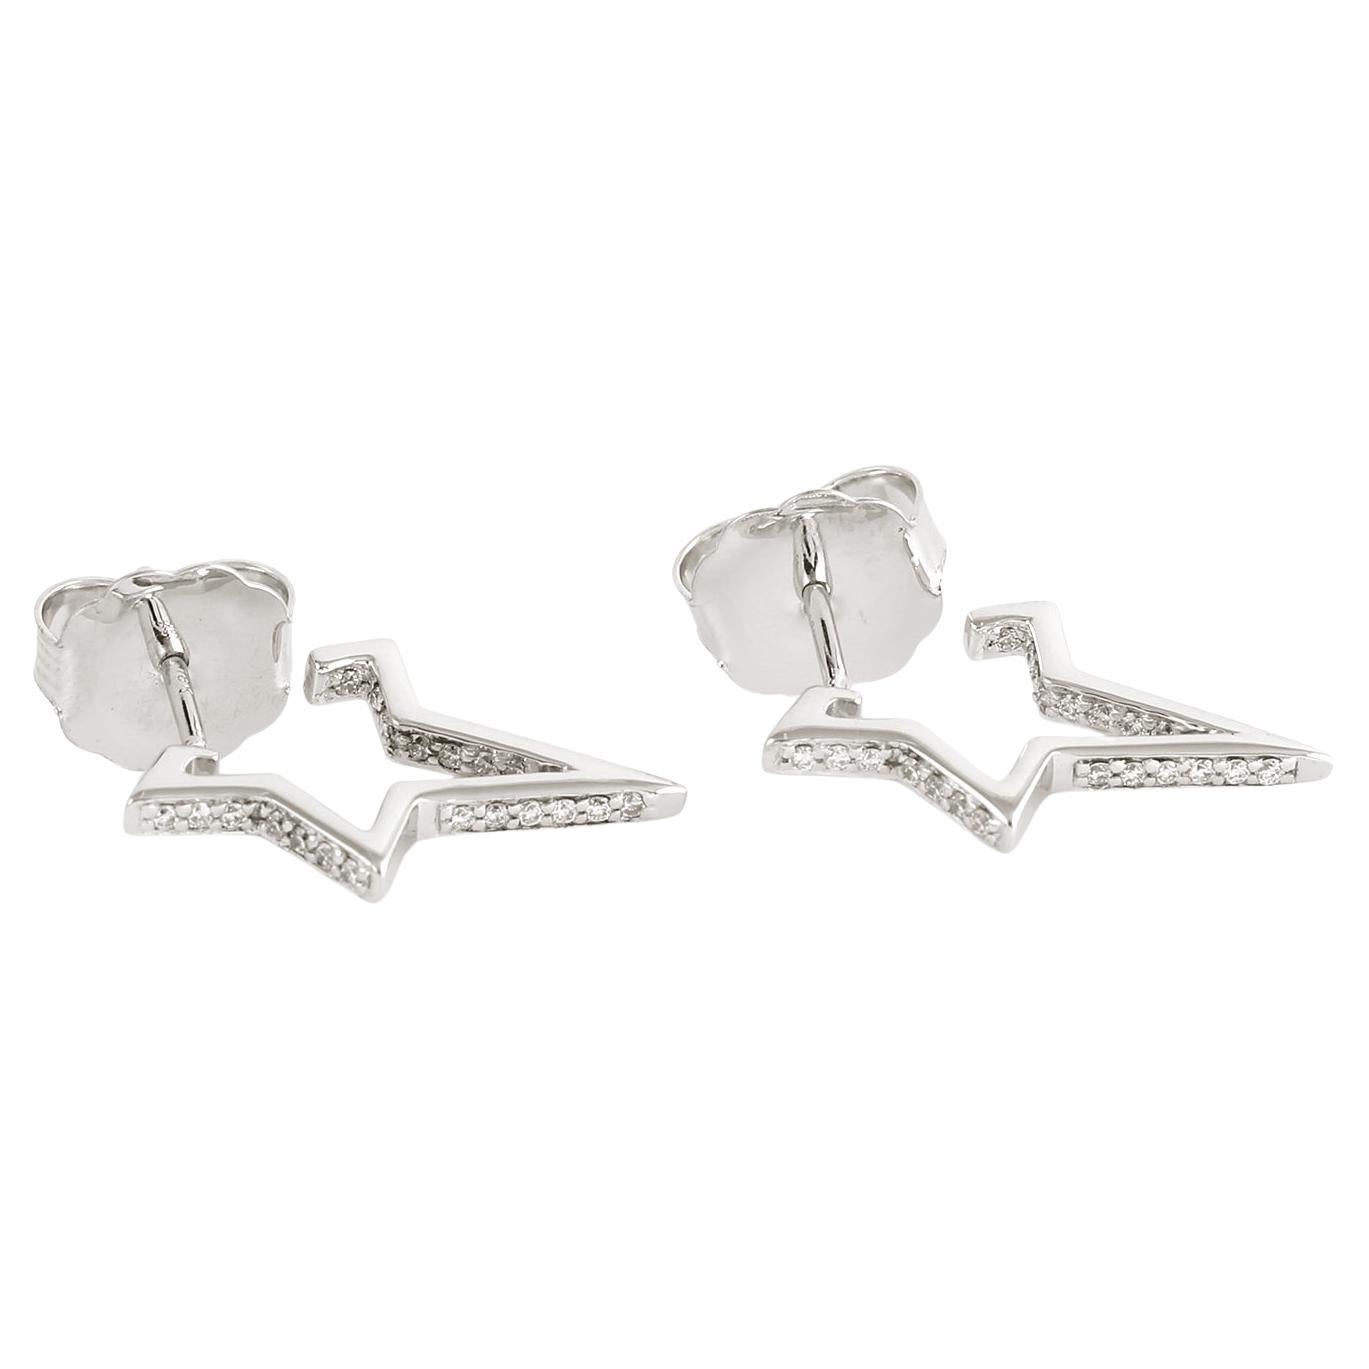 Half Star Pave Diamond Dangle Earrings Made In 18K White Gold